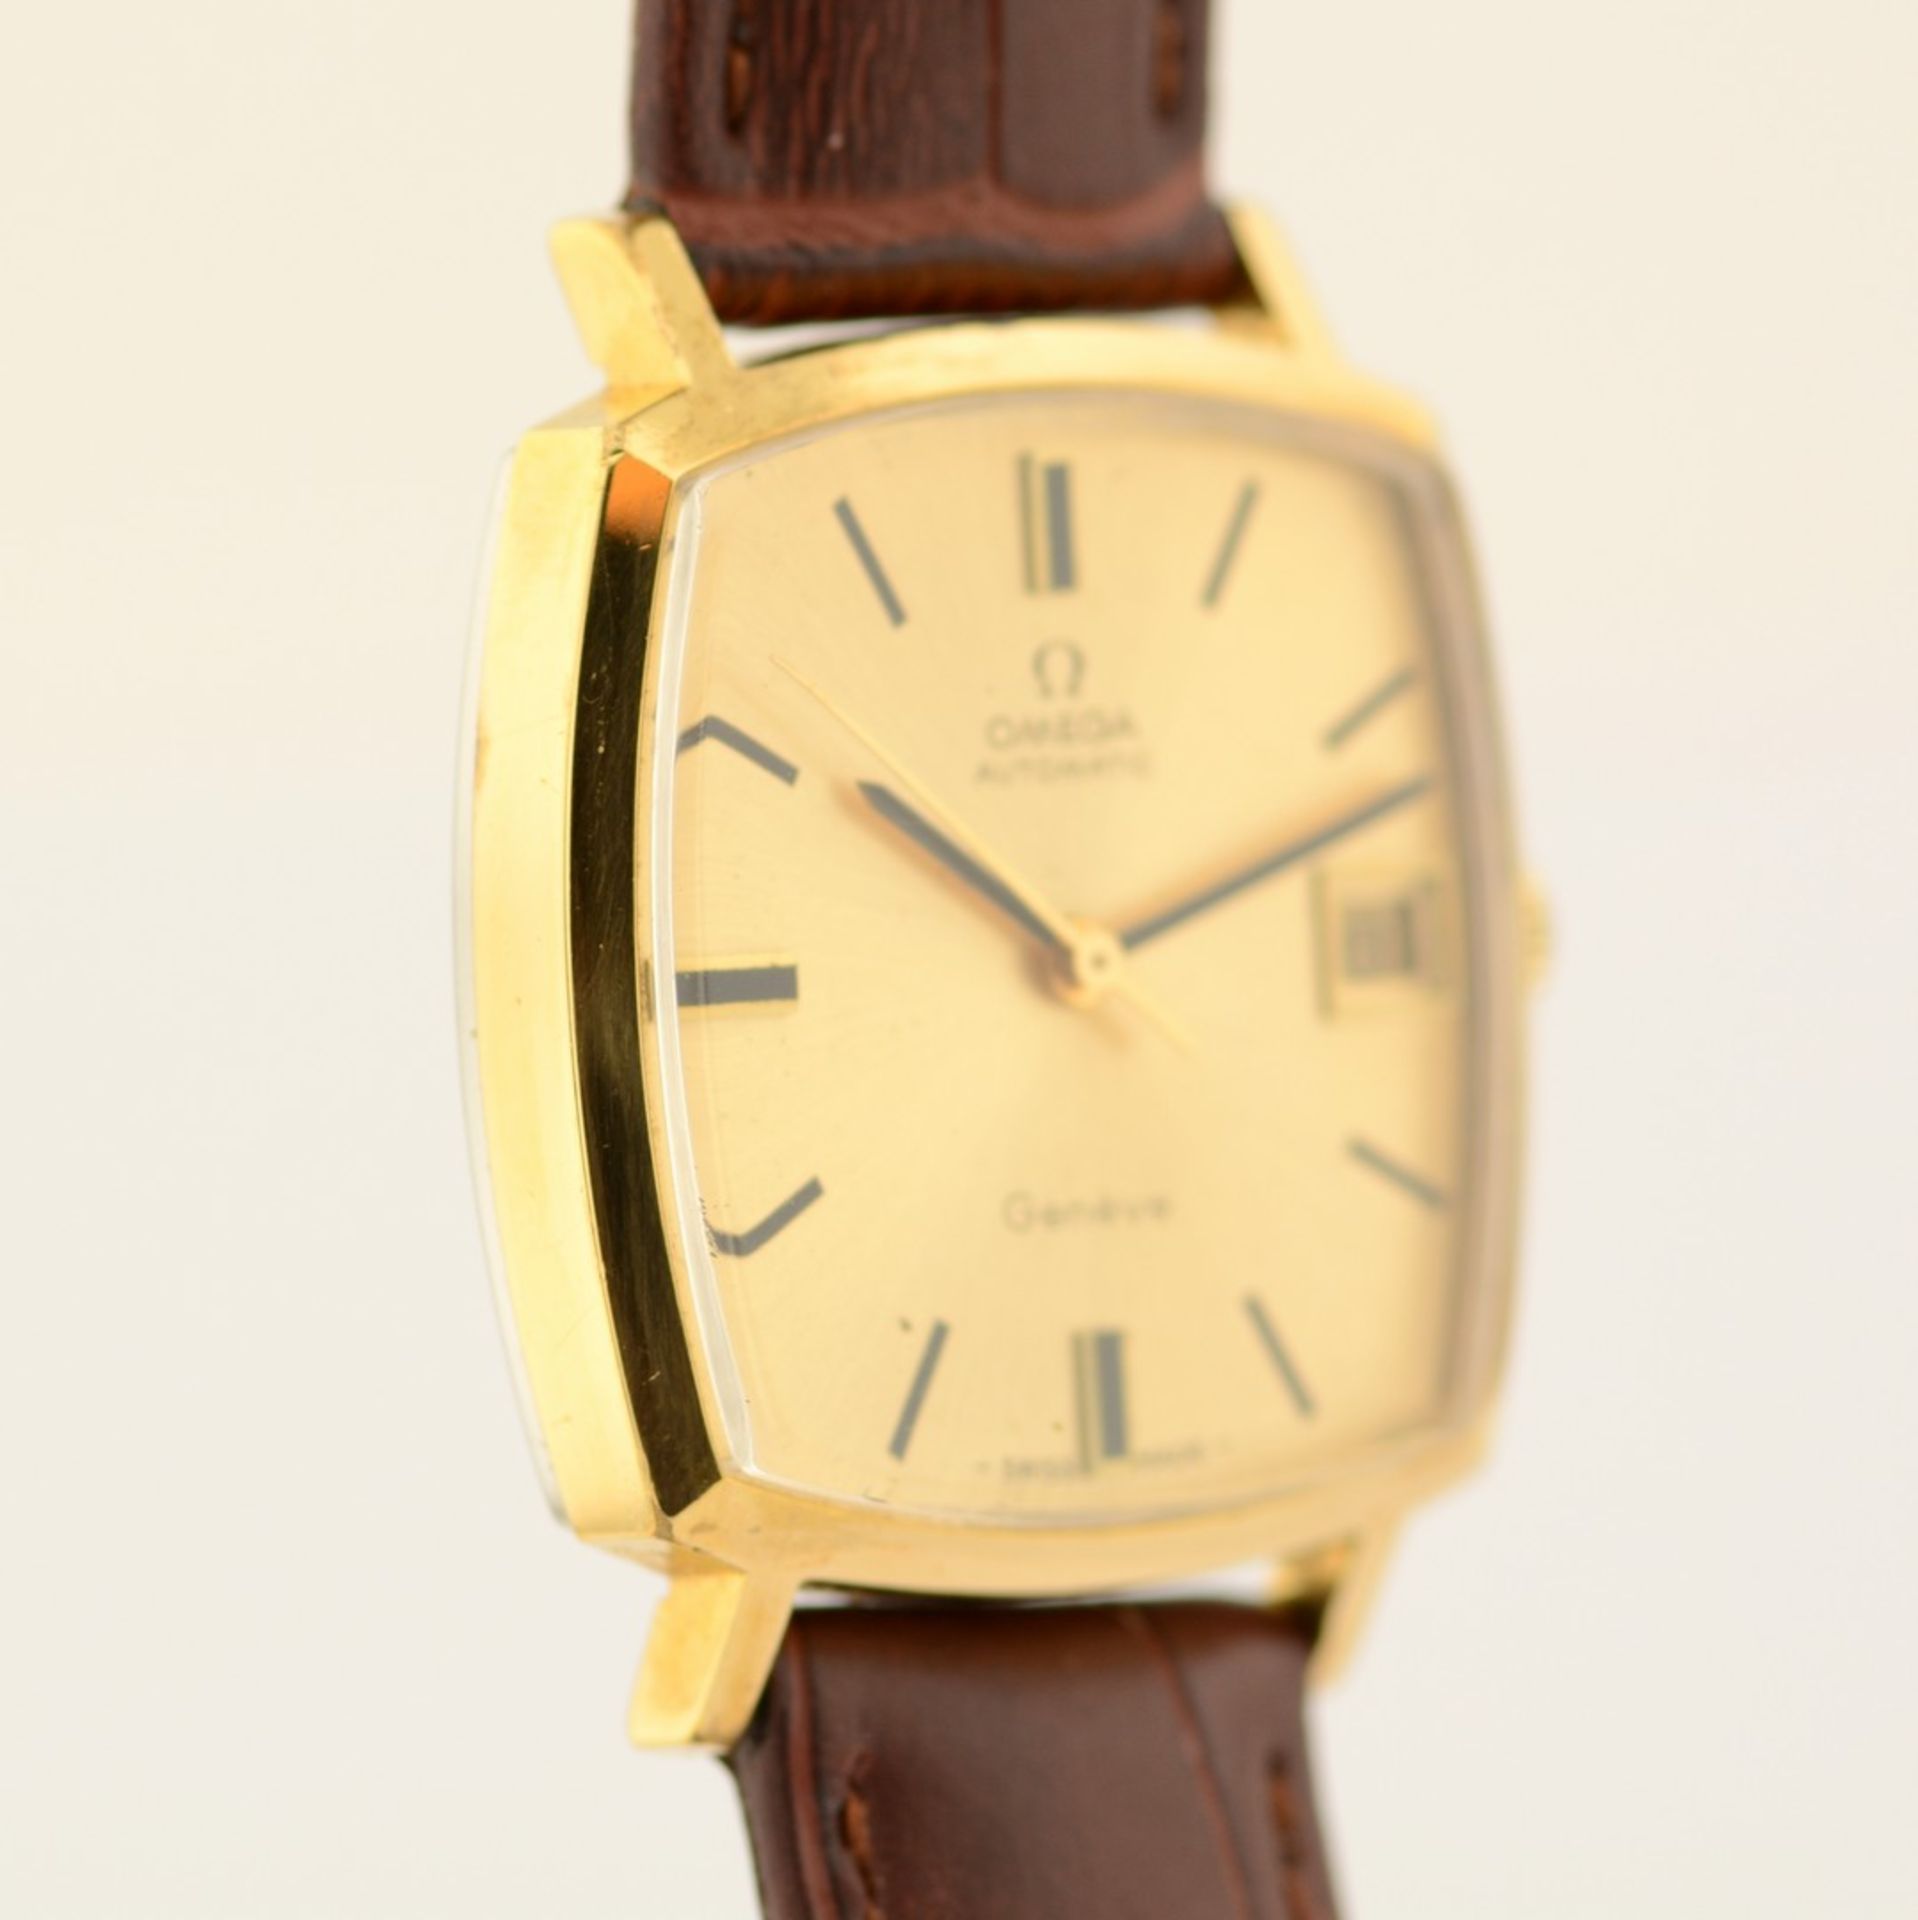 Omega / Geneve - Automatic - Date - Gentlemen's Steel Wristwatch - Image 7 of 7